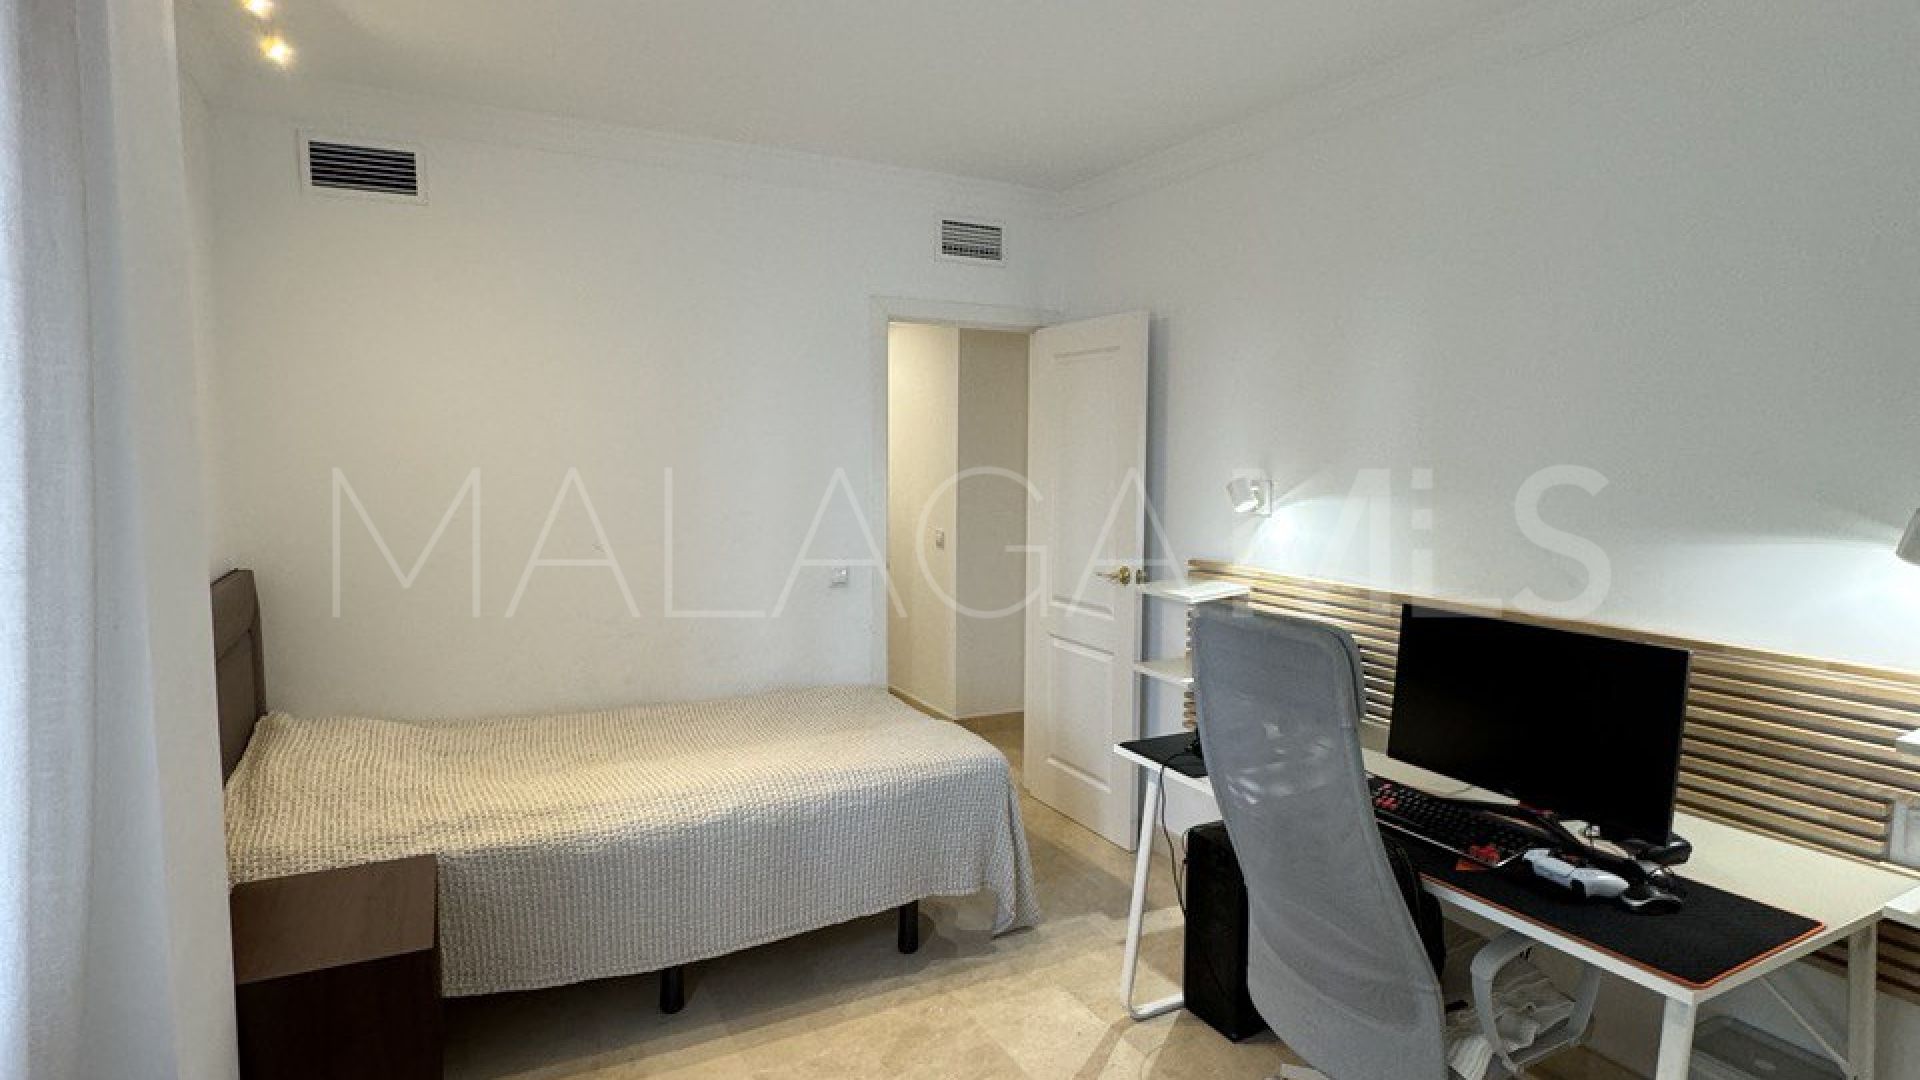 For sale San Pedro de Alcantara ground floor apartment with 3 bedrooms